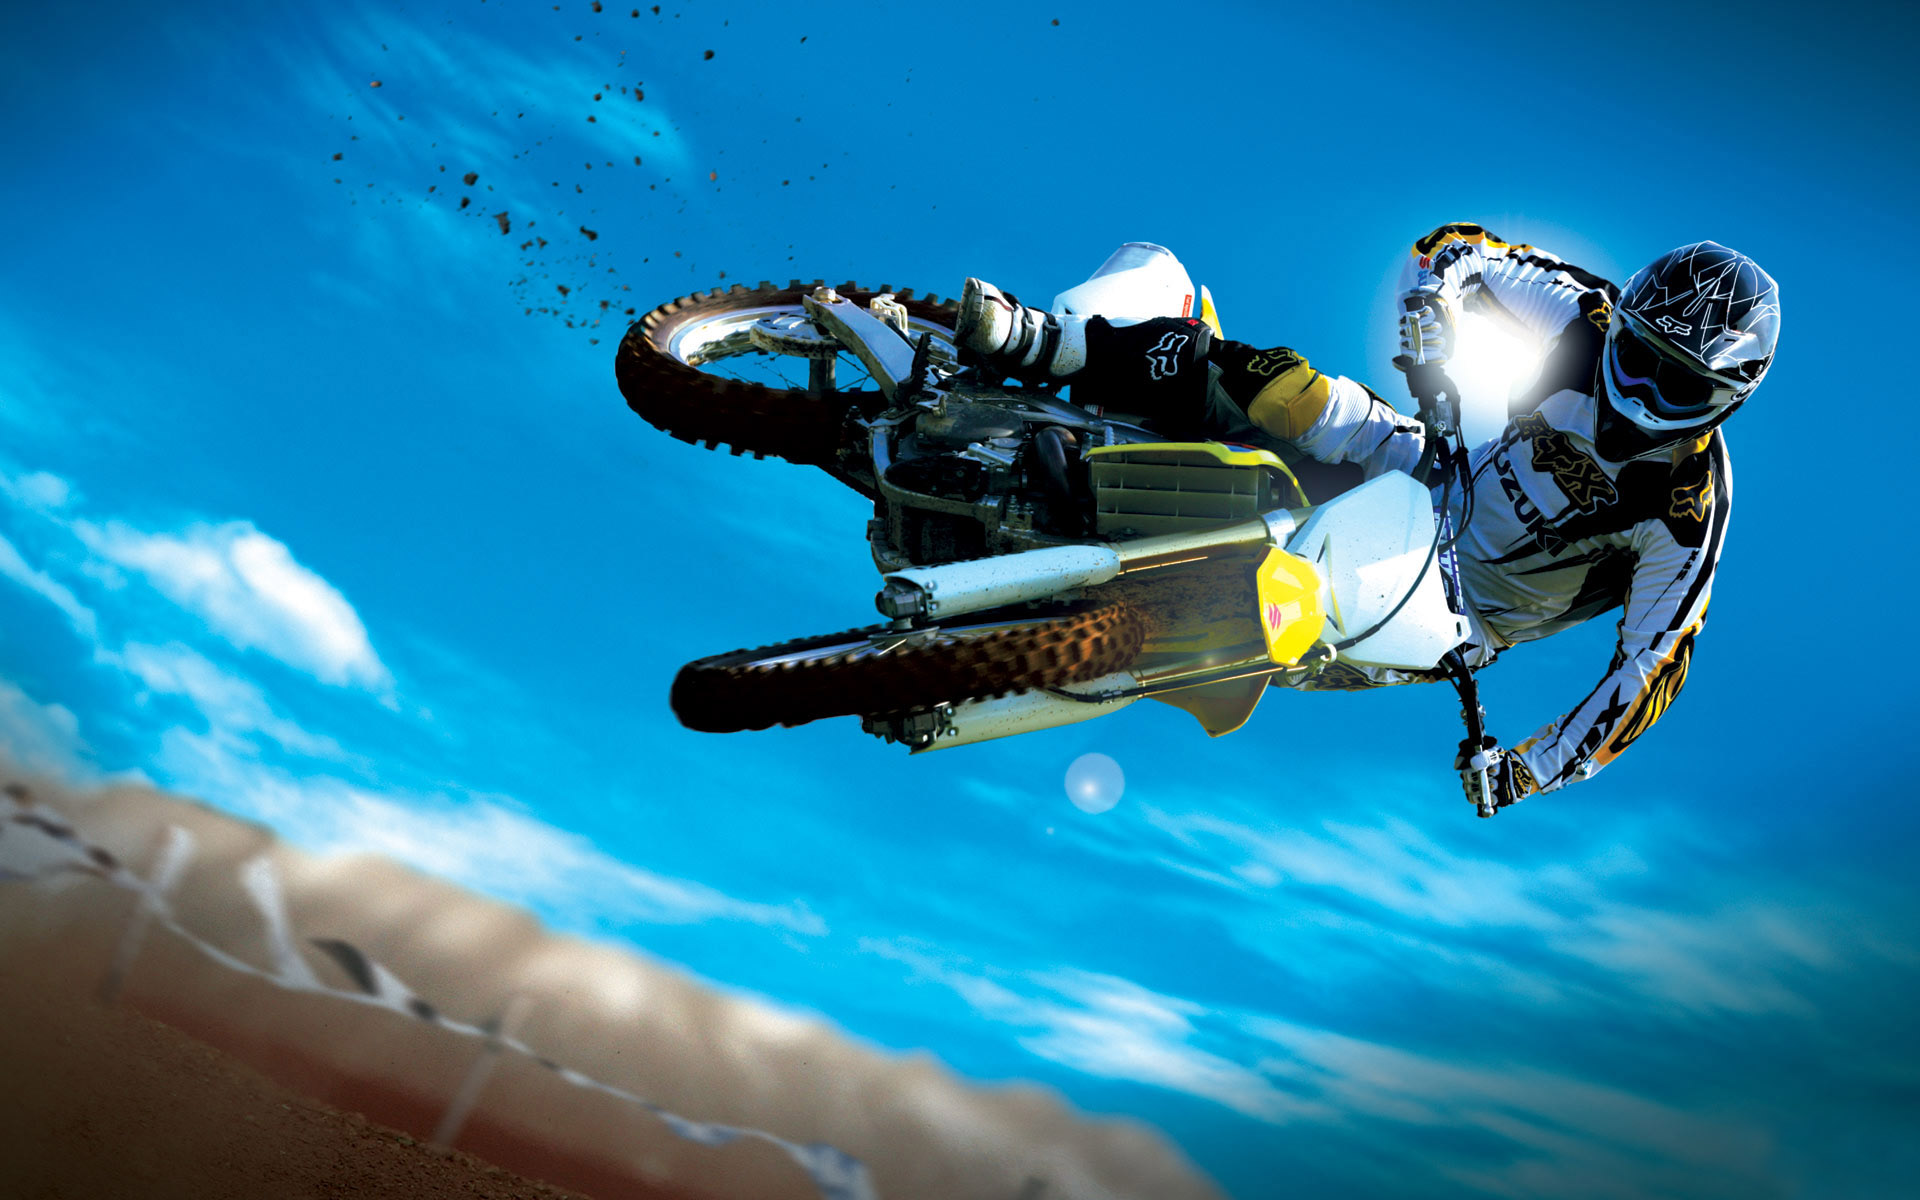 Amazing Motocross Bike Stunt2967811279 - Amazing Motocross Bike Stunt - Stunt, Motocross, Bike, Amazing